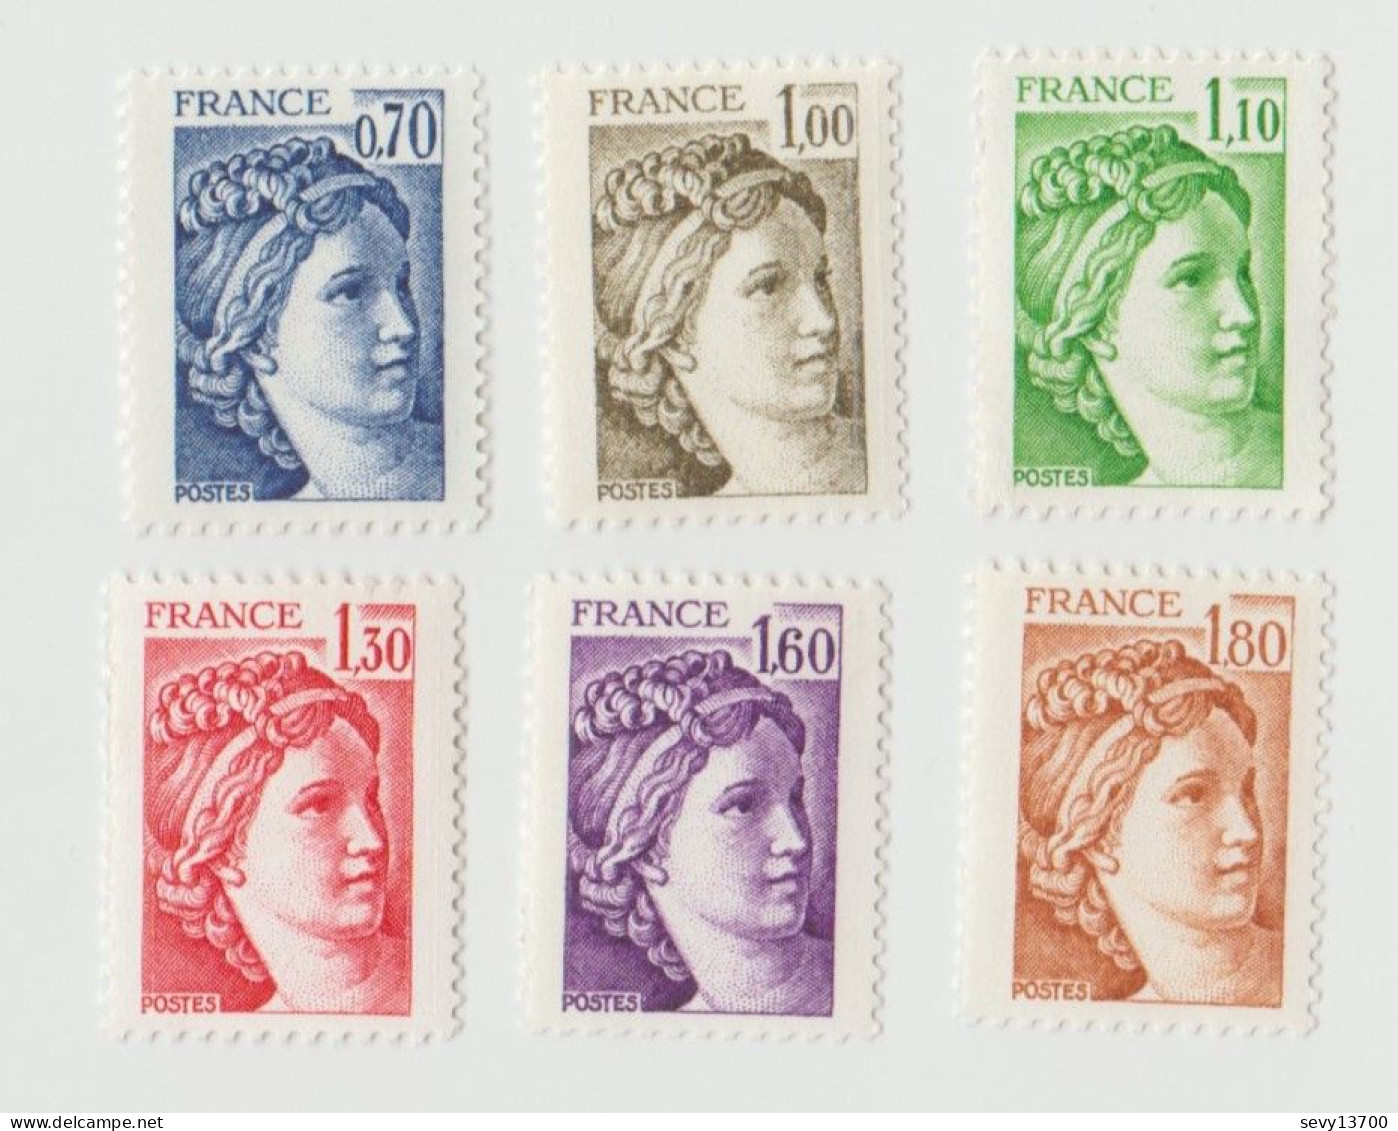 France 35 Timbres Neufs Sabine De Gandon Année 1978 1979 1980 1981 - 1977-1981 Sabine (Gandon)